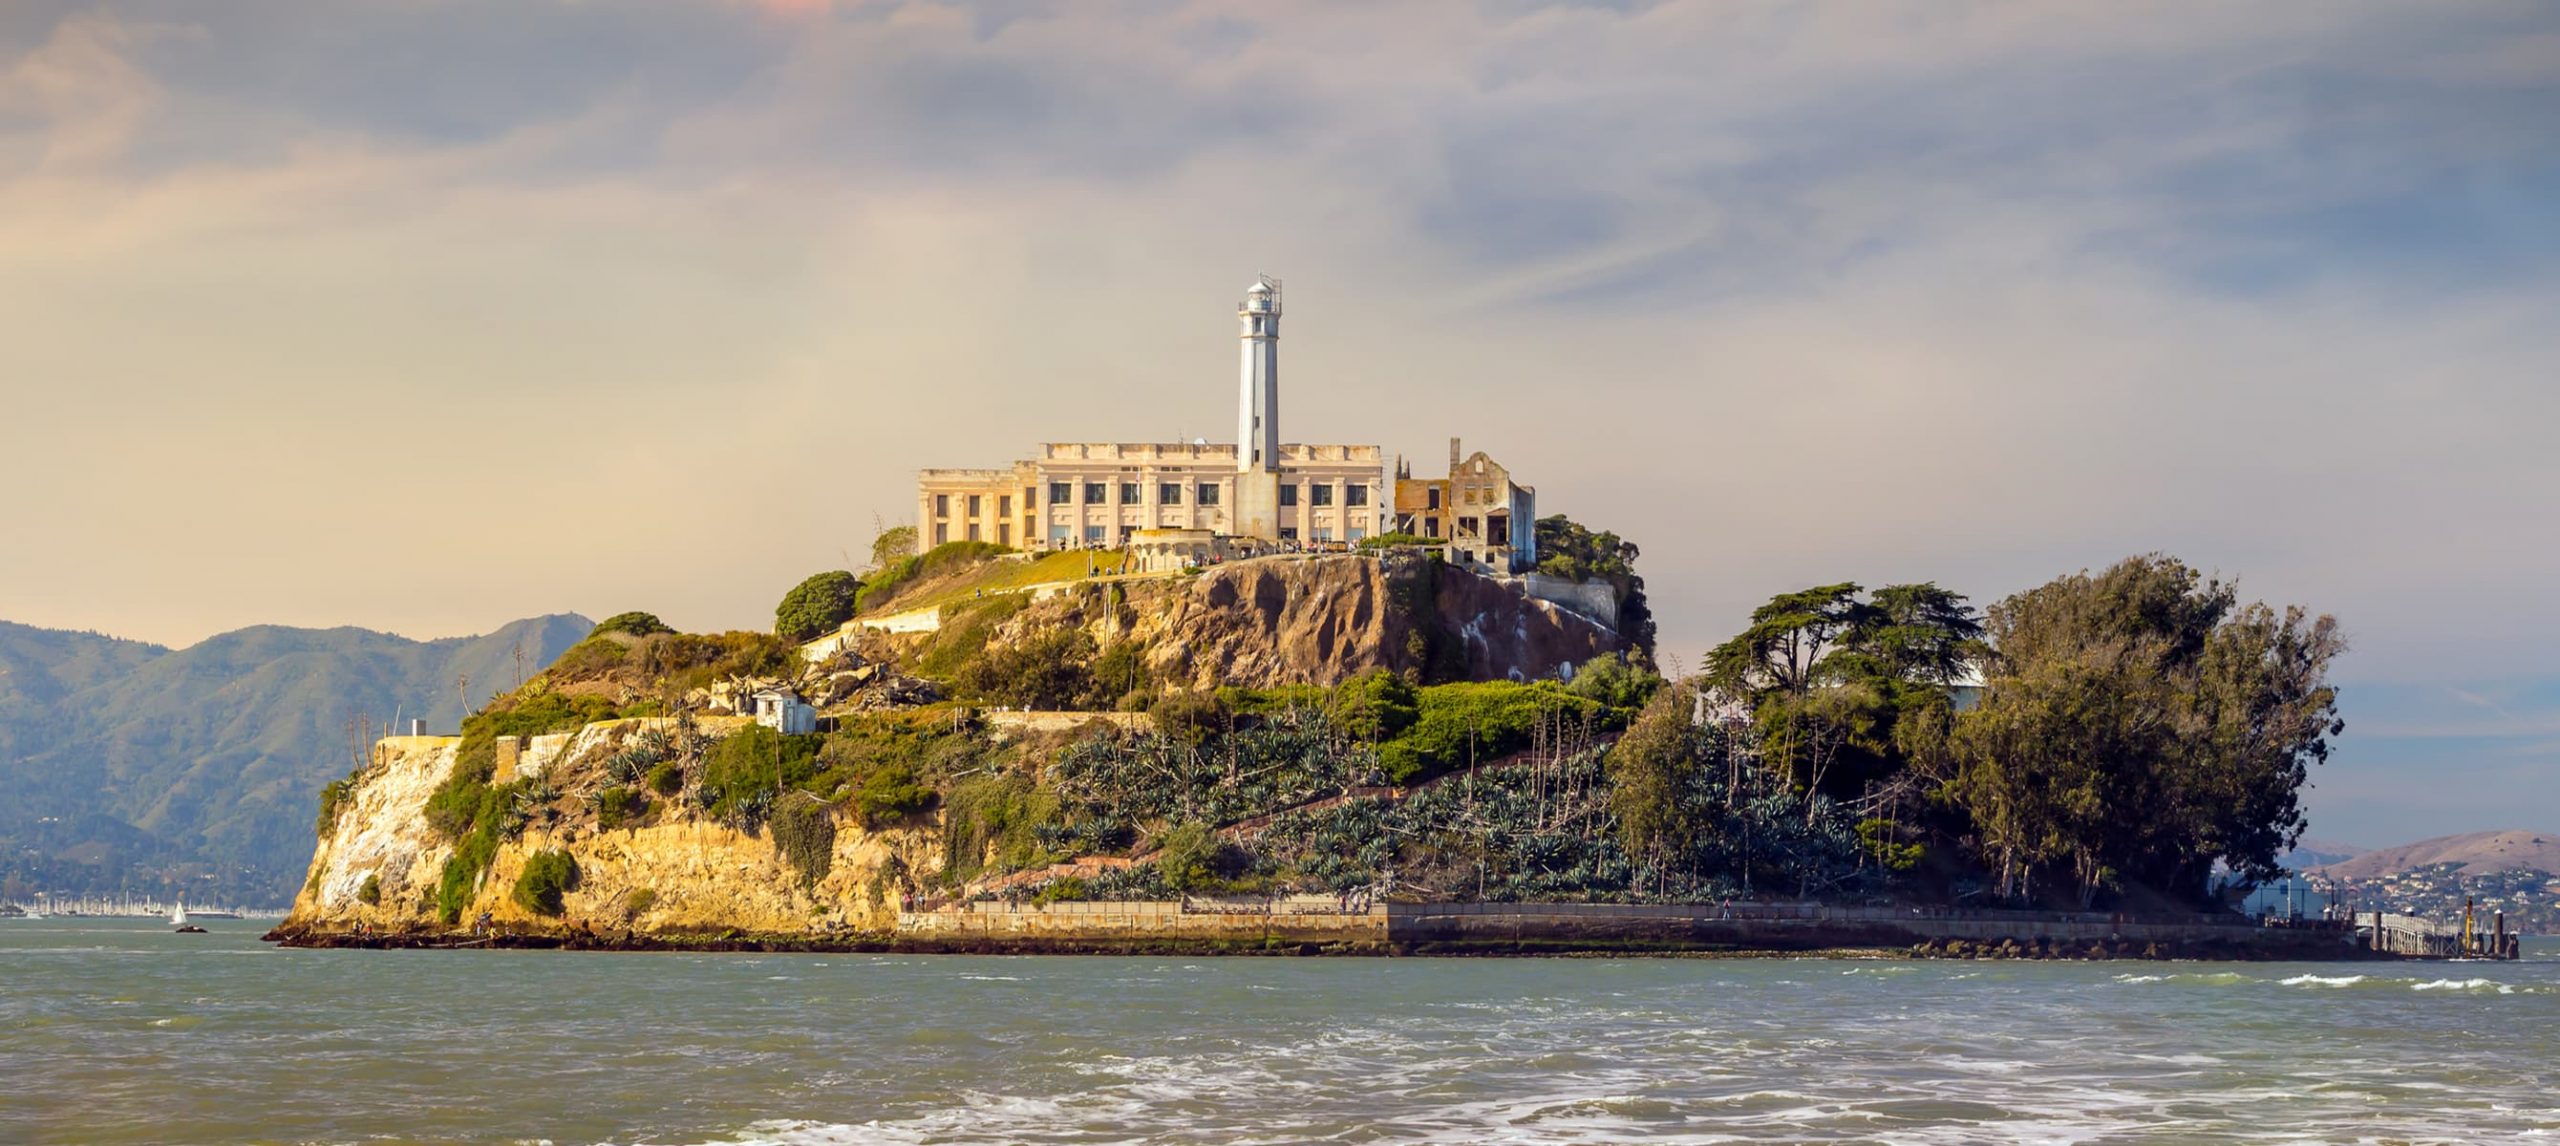 The Alcatraz Island, in San Francisco, California.